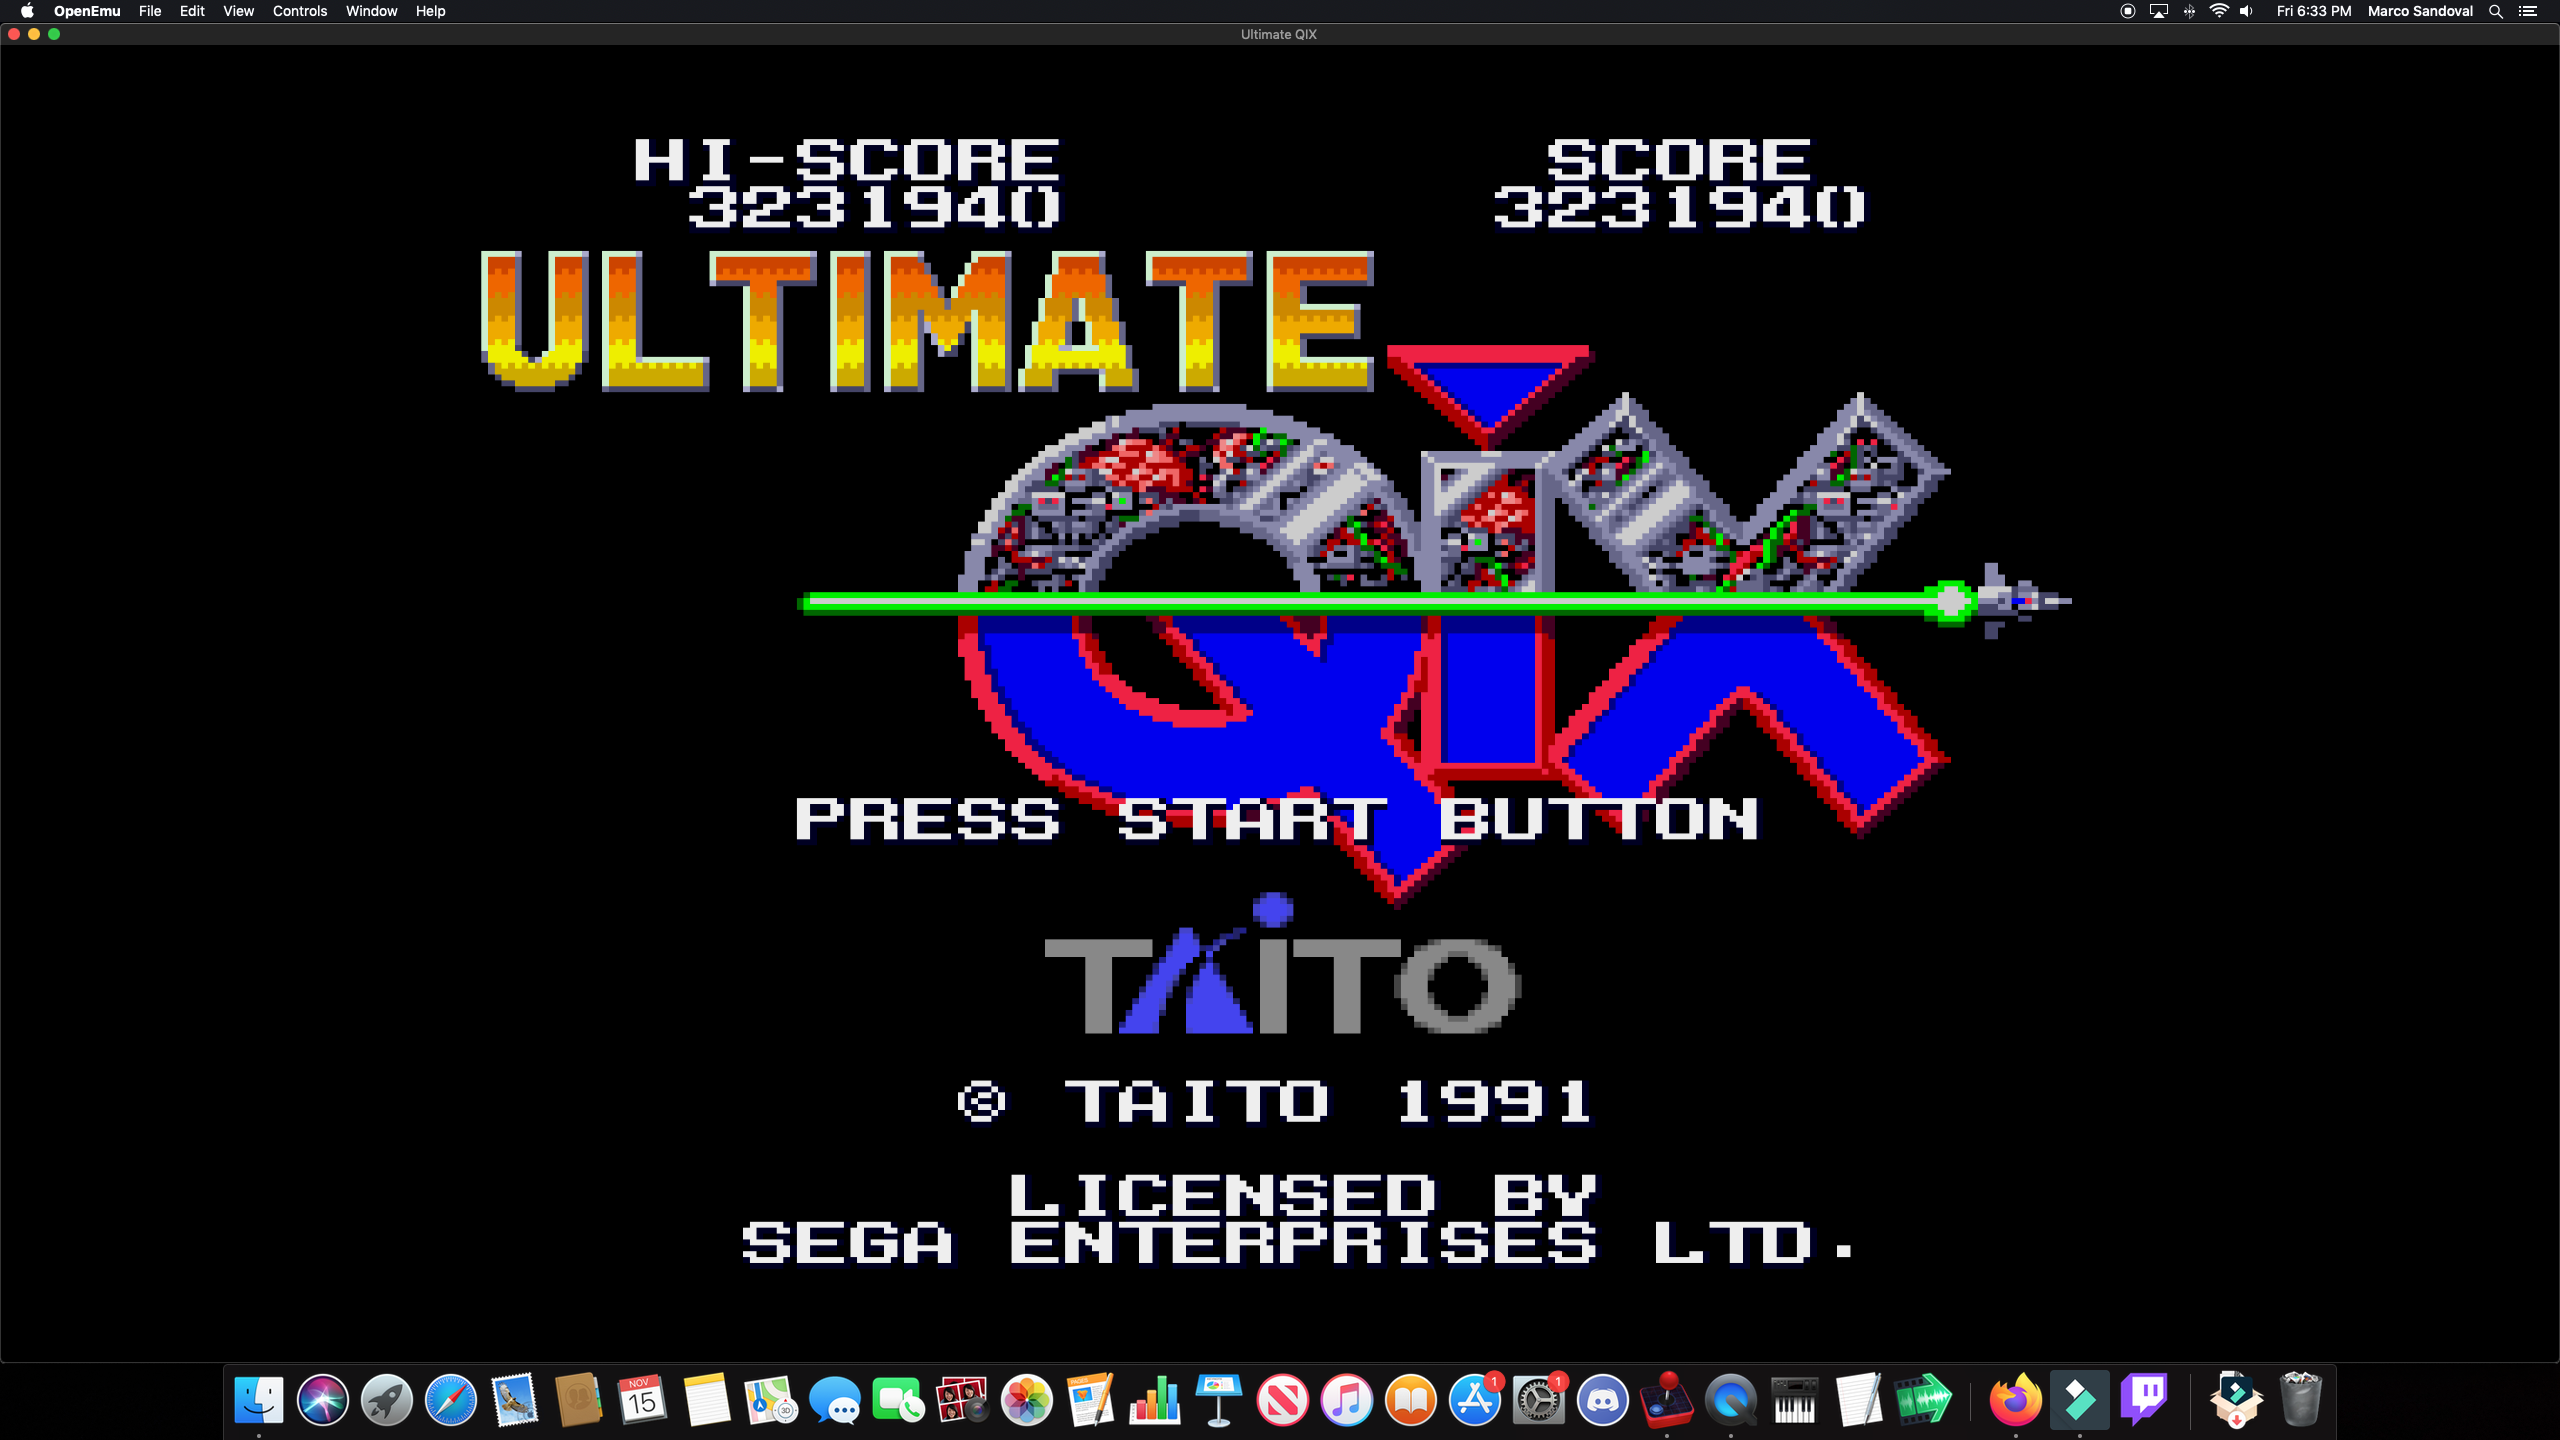 Marco1019: Ultimate Qix (Sega Genesis / MegaDrive Emulated) 3,231,940 points on 2019-11-16 12:16:05